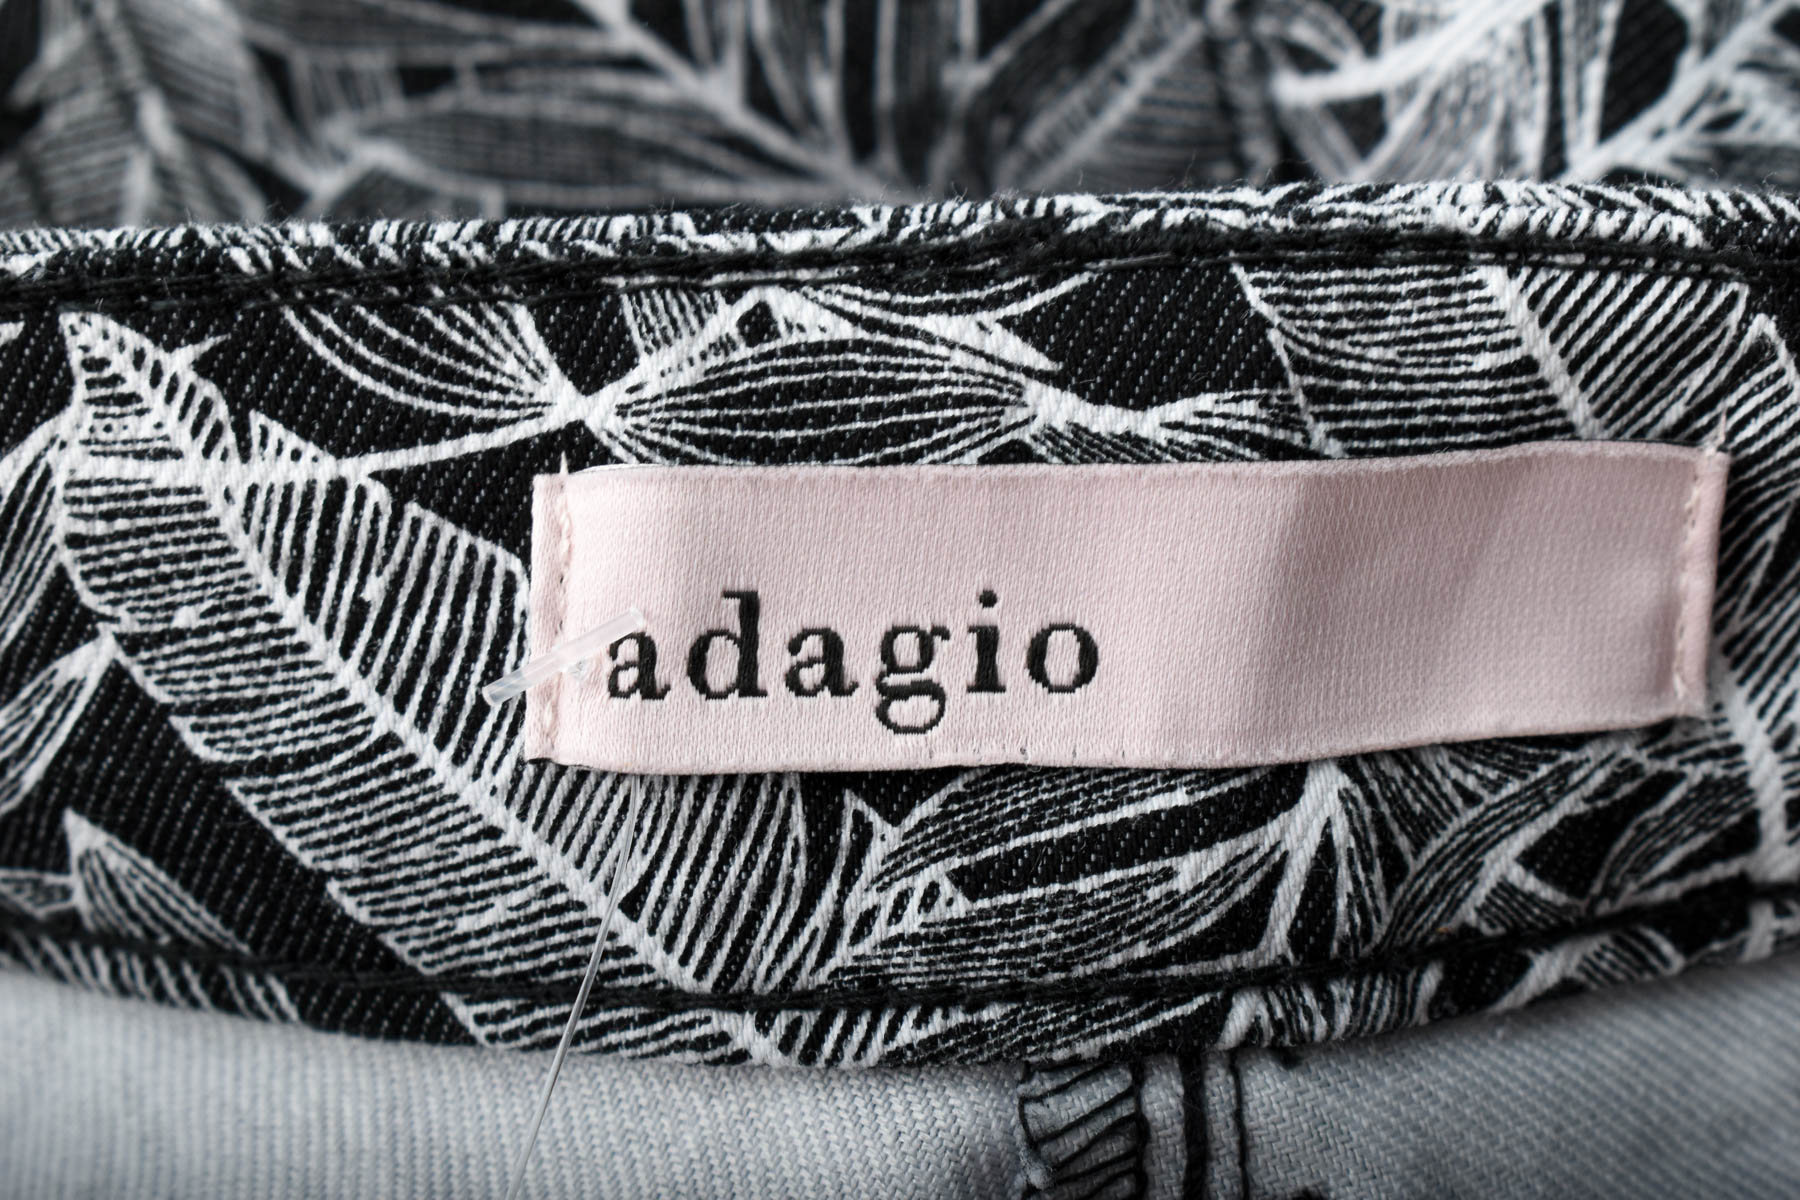 Women's trousers - Adagio - 2